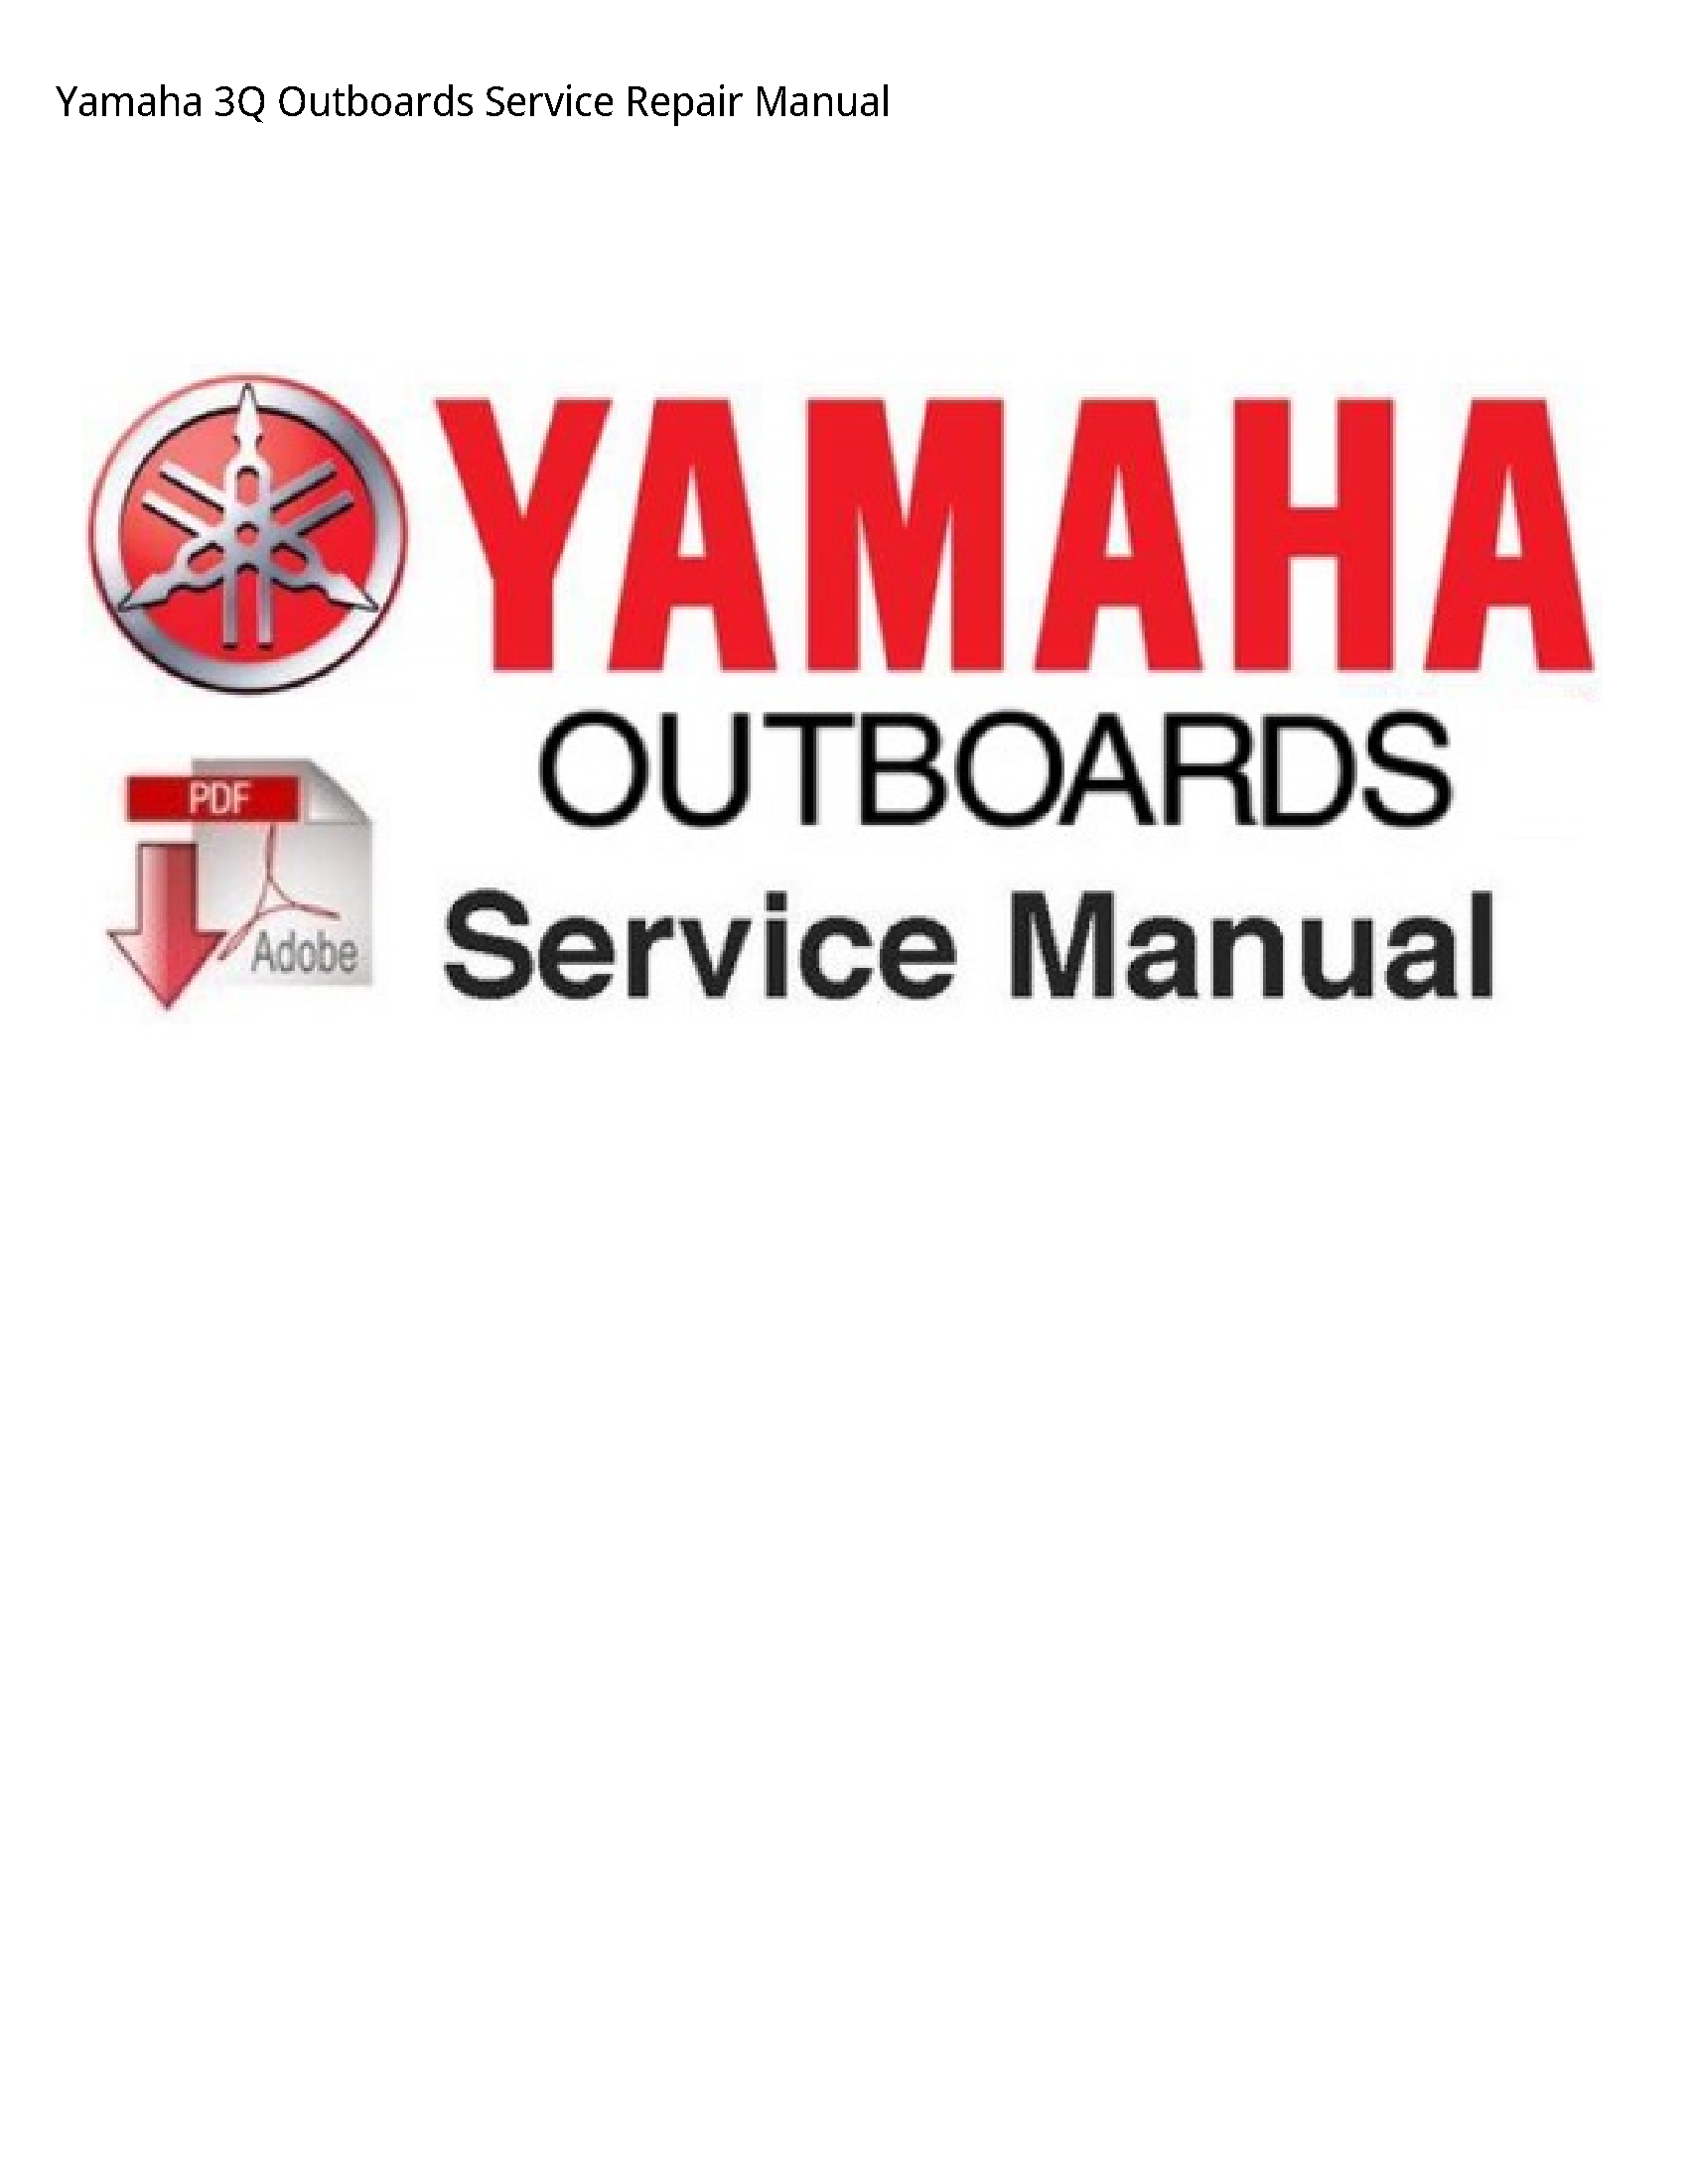 Yamaha 3Q Outboards manual